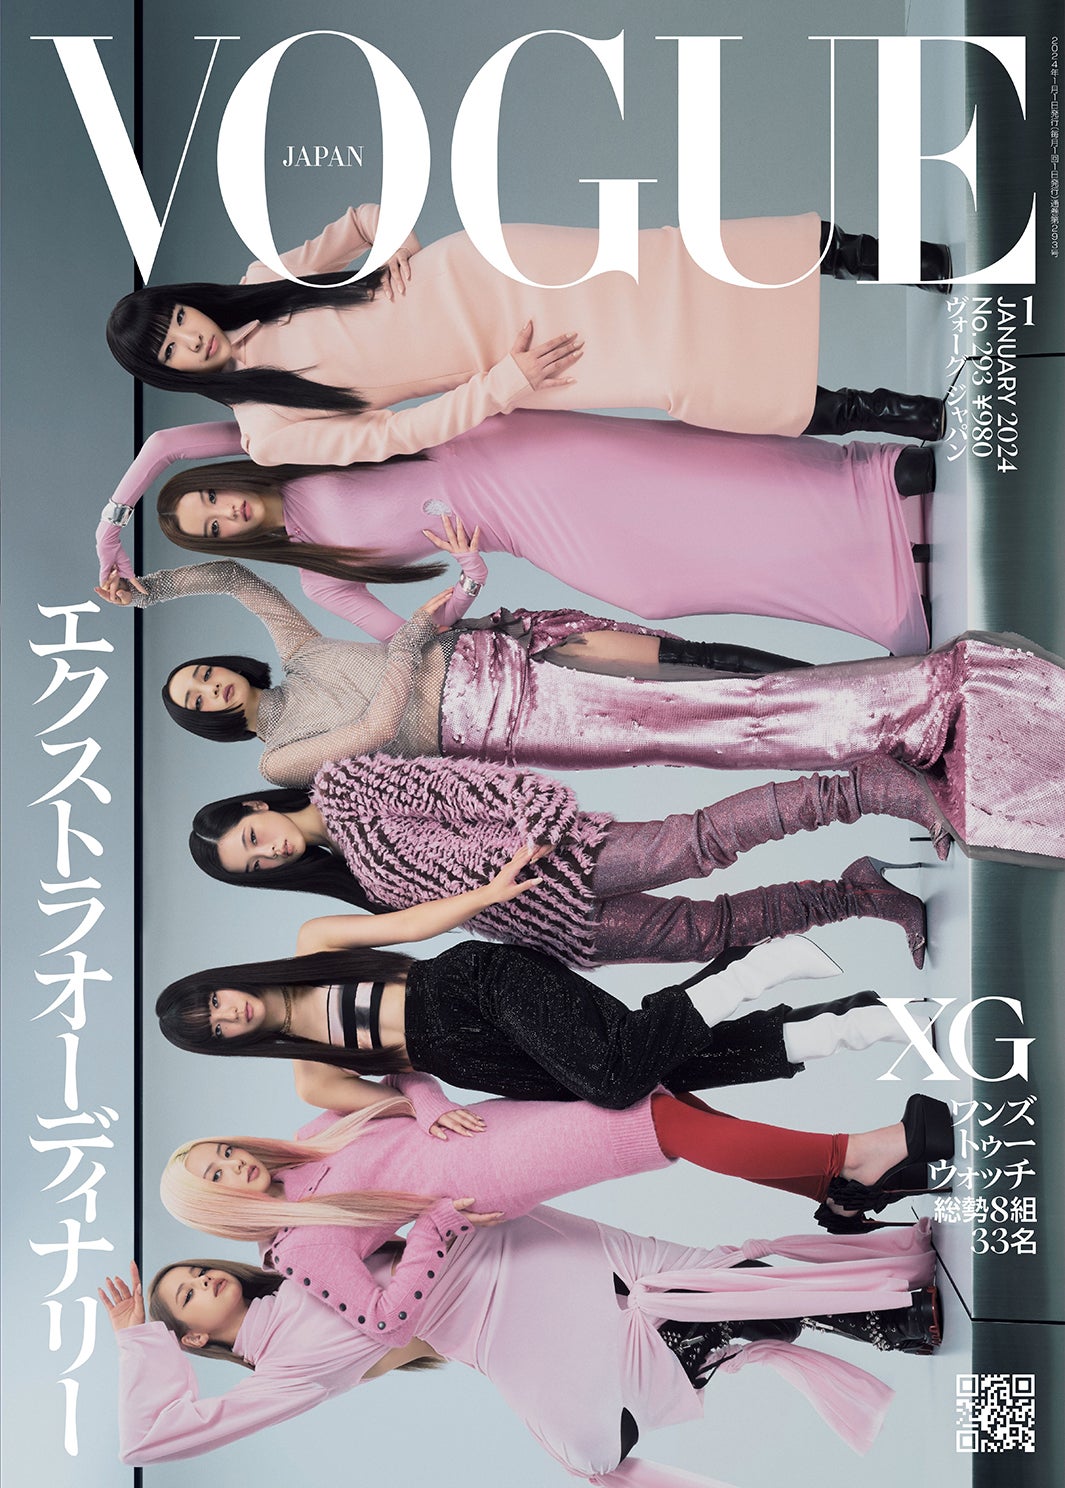 XG「VOGUE JAPAN」表紙初登場で圧巻スタイル披露 グループへの想い語る - モデルプレス